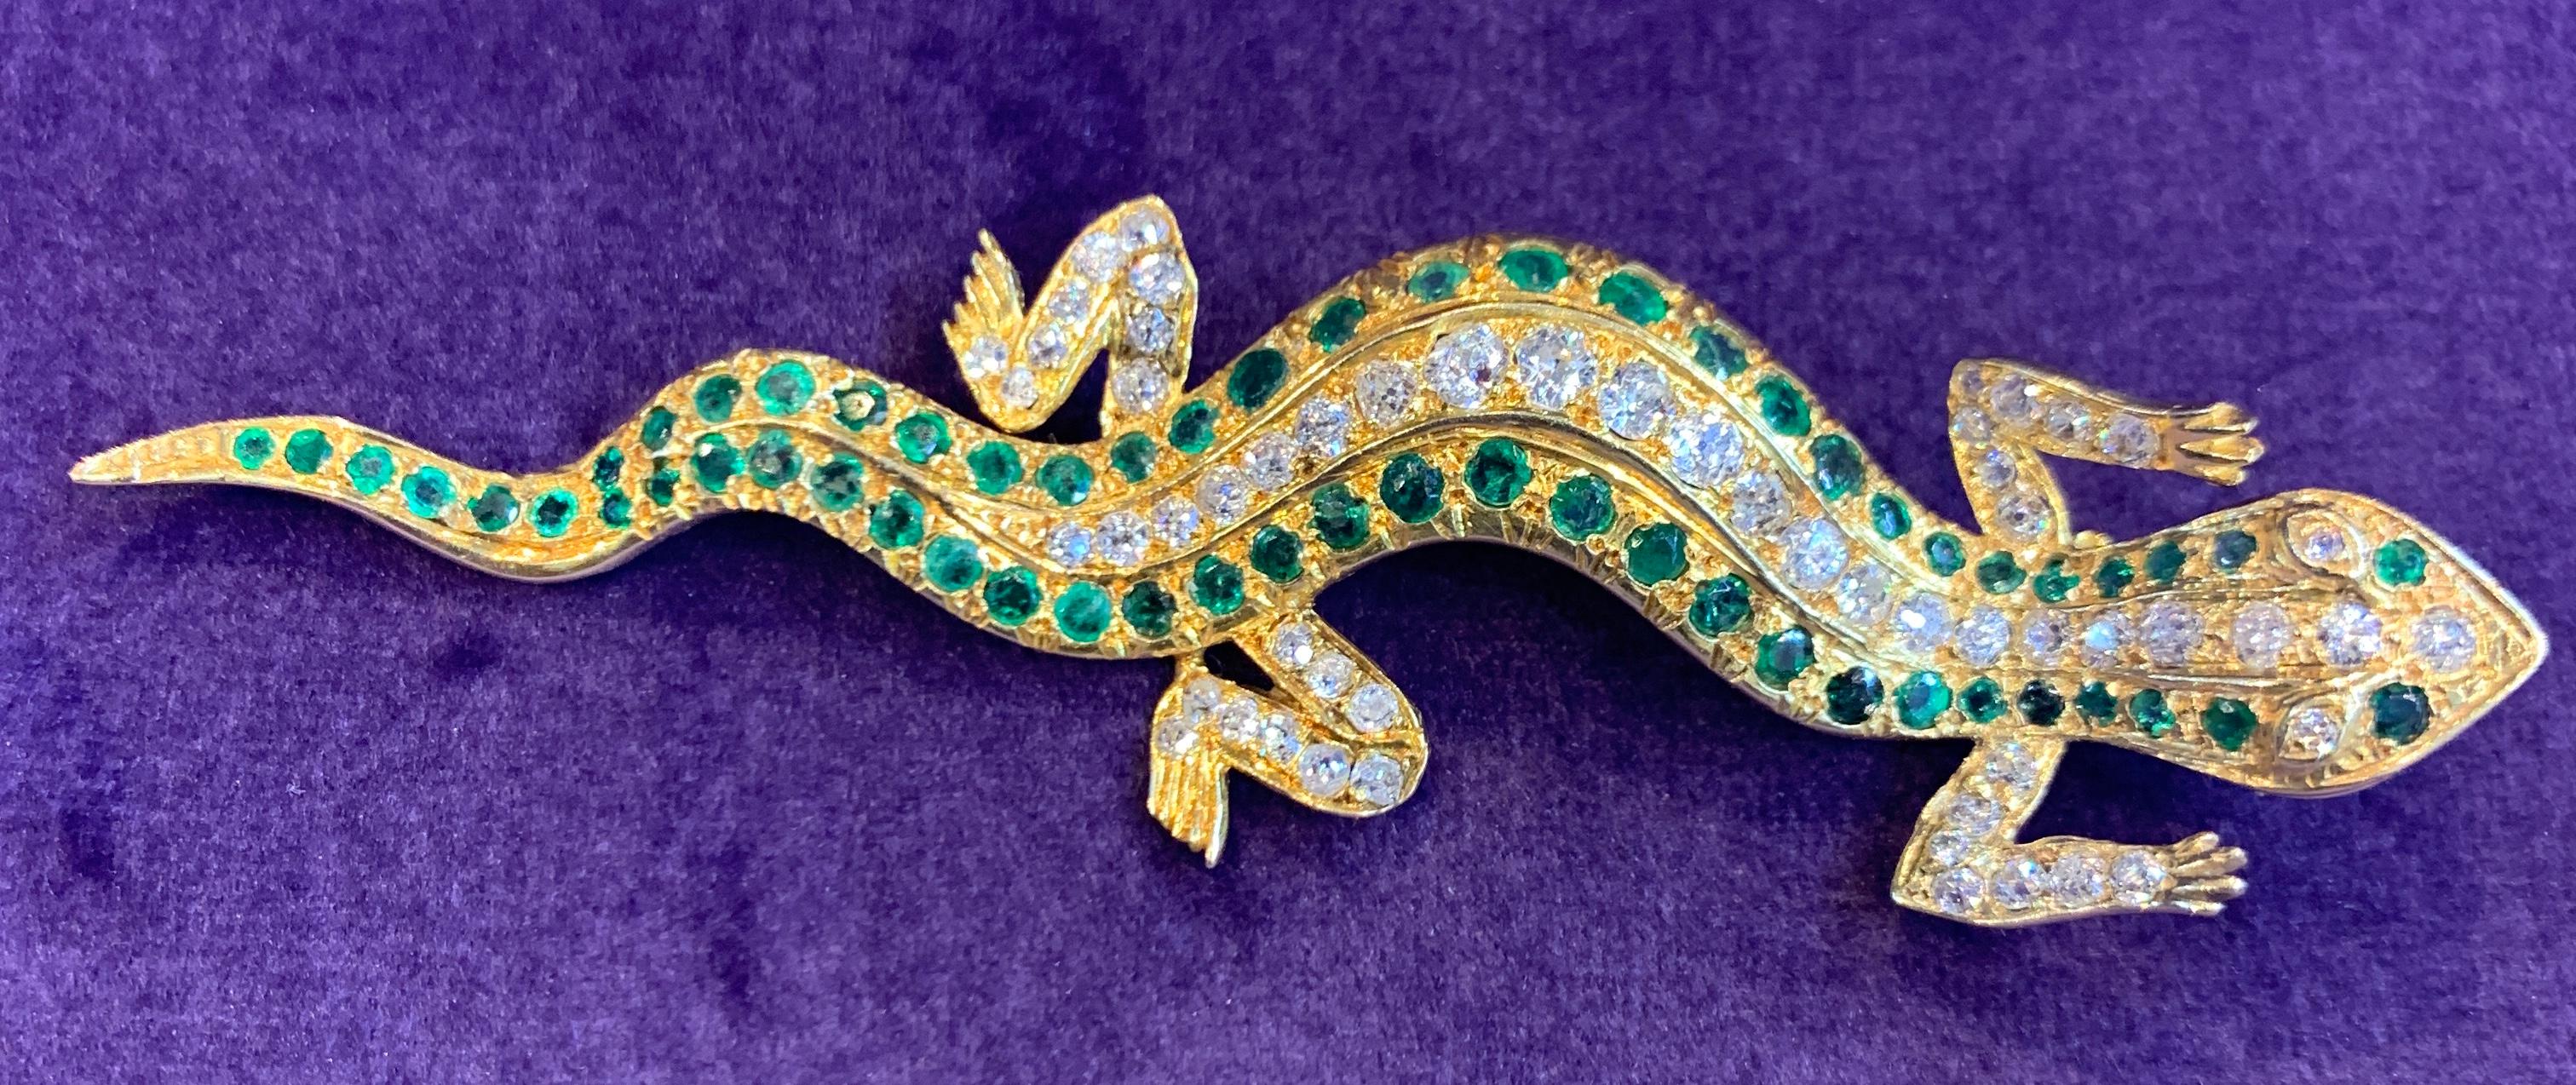 Victorian Emerald & Diamond Crawling Lizard Salamander Brooch, set in 14K Yellow Gold made Circa 1900
56 diamonds, Diamond Weight: App. 2.25 cts. 
59 emeralds weighing app. 1.2 cts. 
Measurements: 3.5